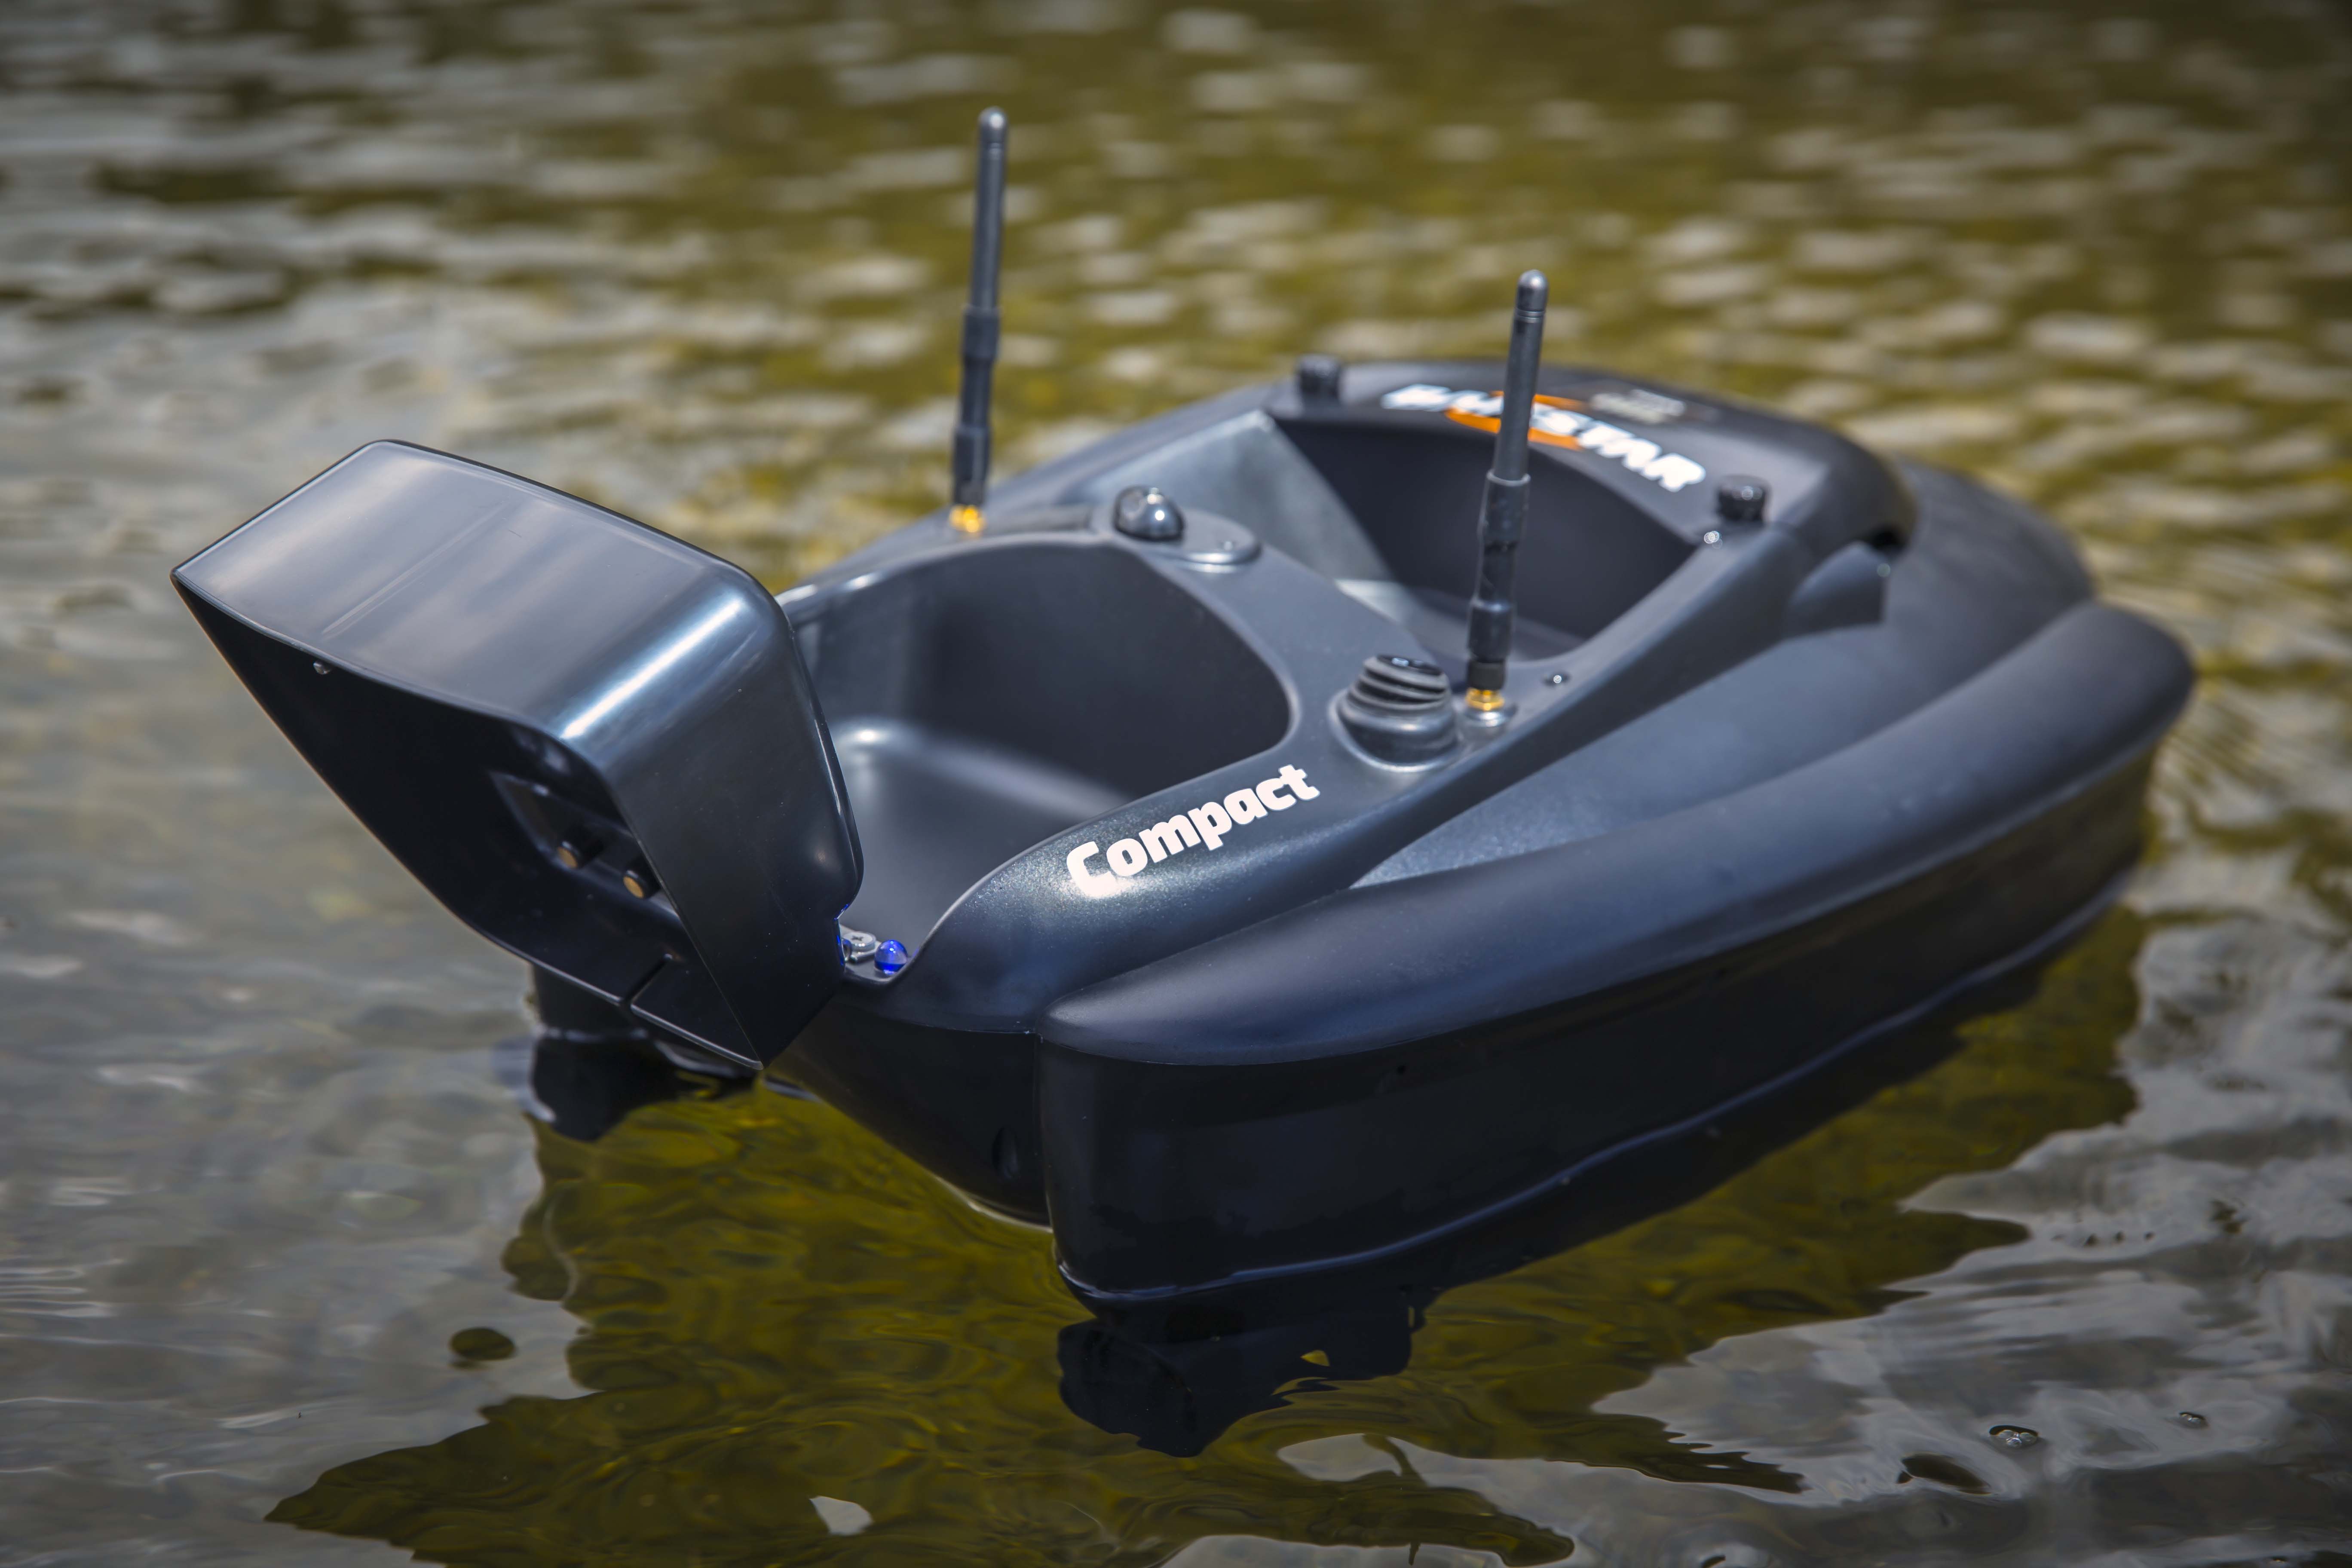 BaitStar Voerboot Compact Black + Sonartab